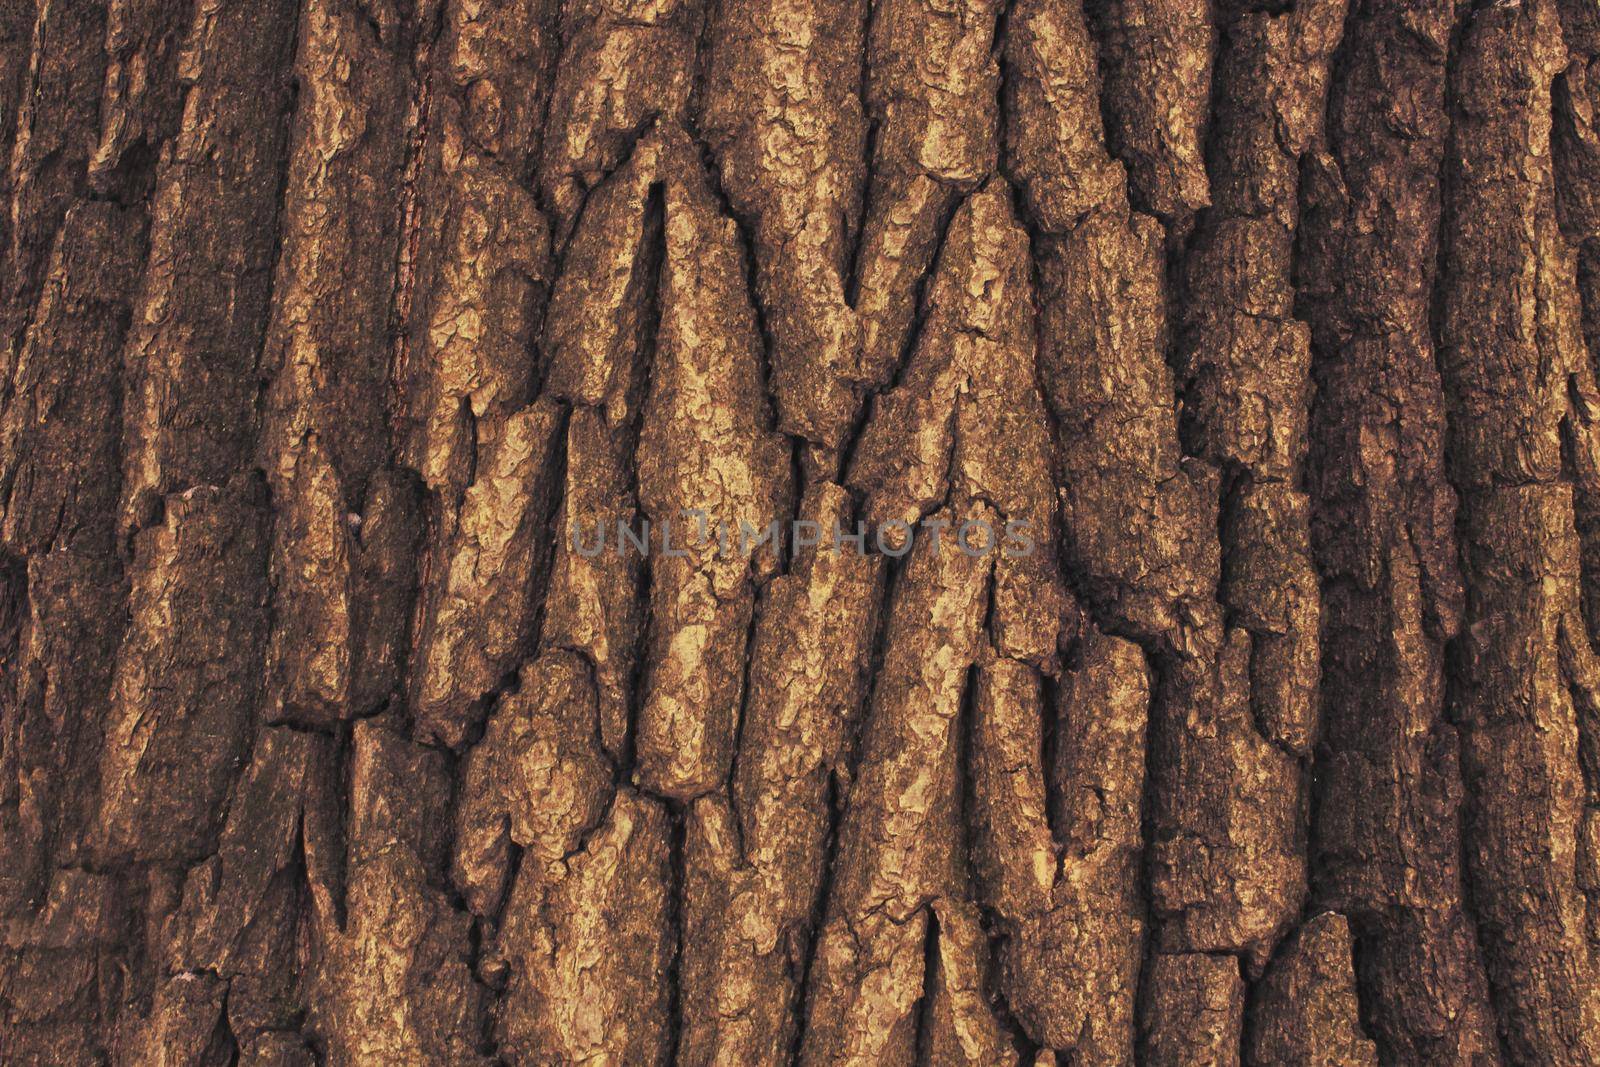 Texture of an old Oak Tree Bark